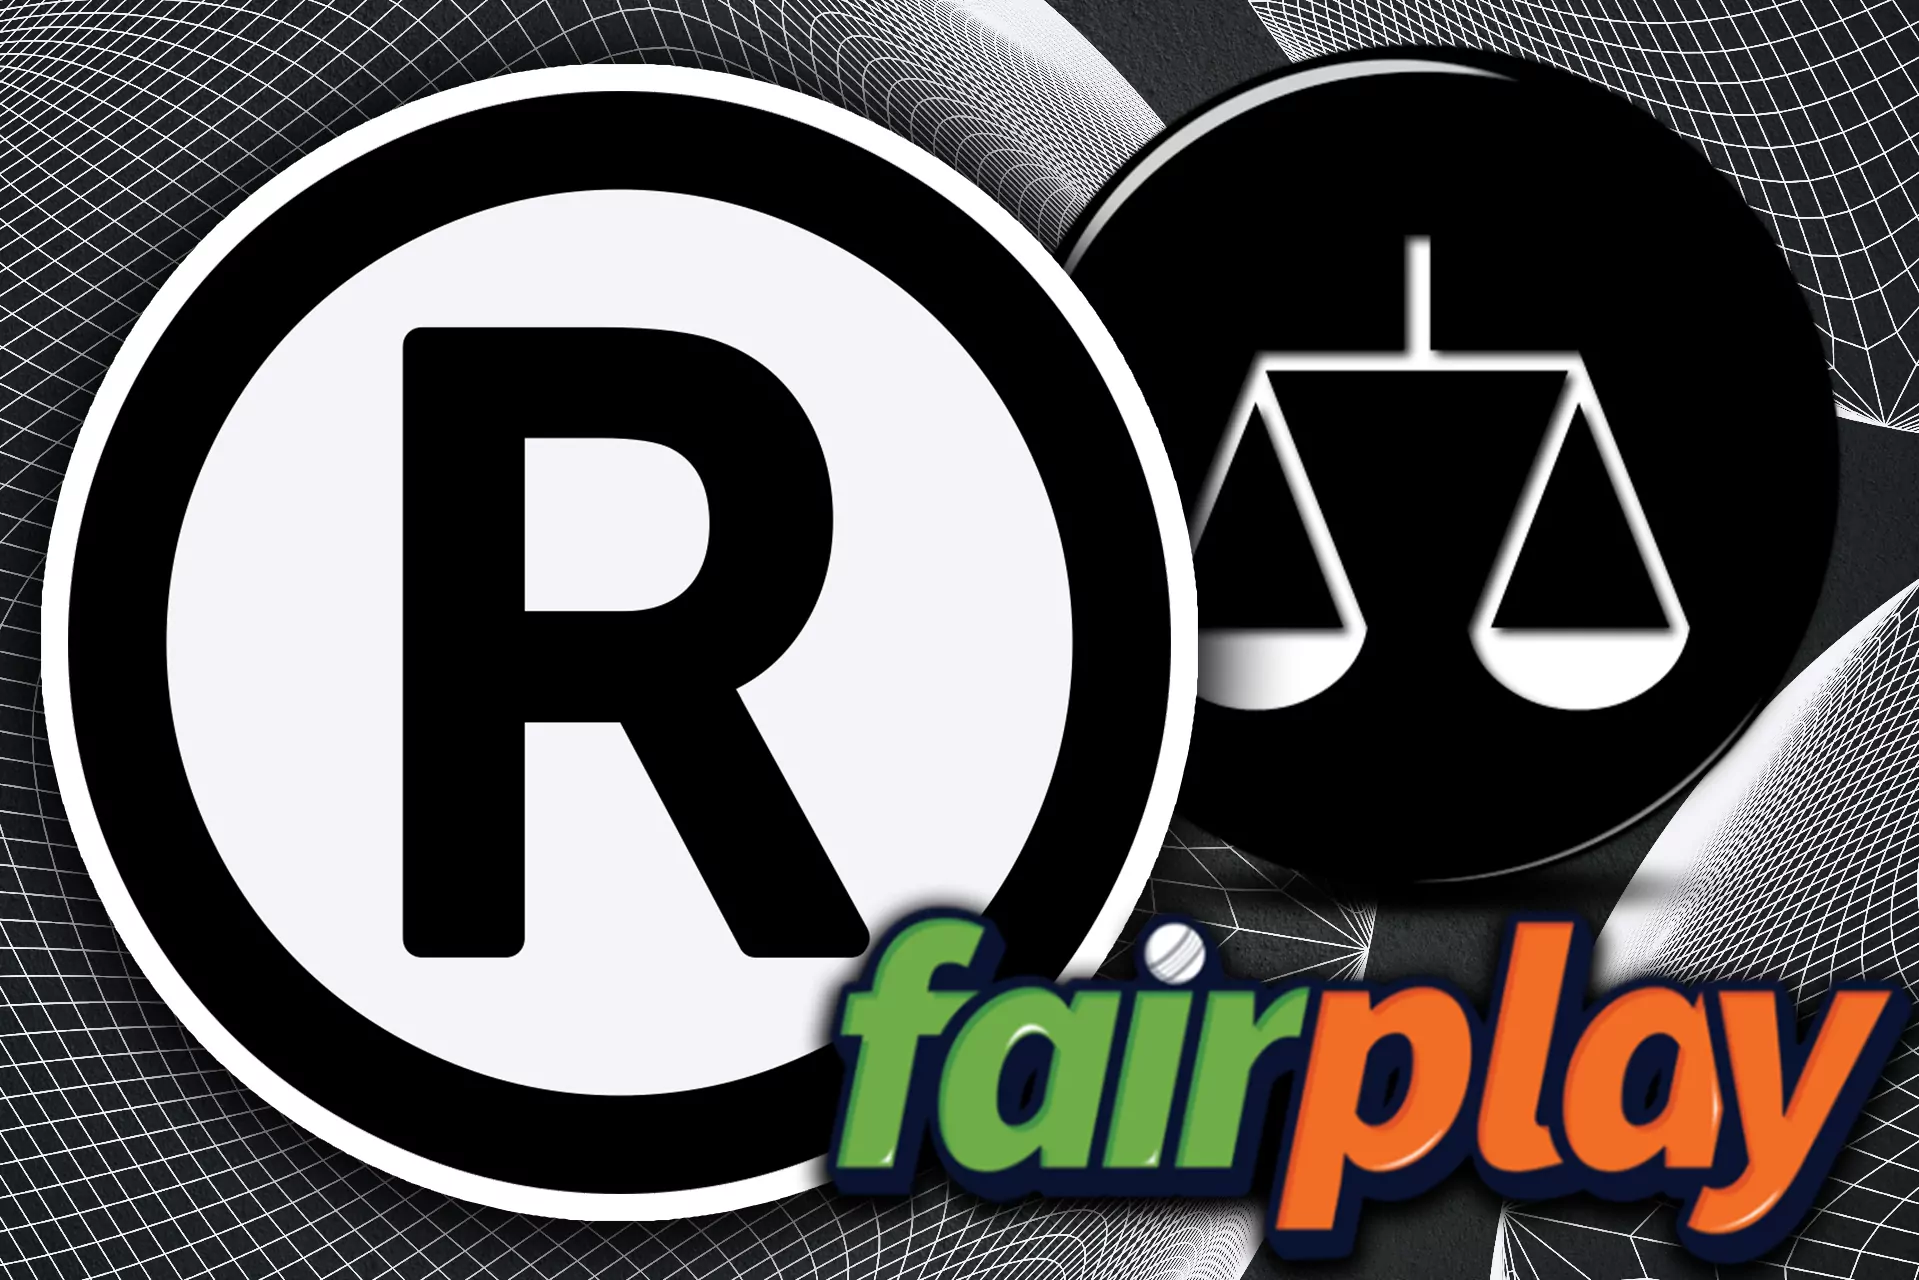 The domain of Fairplay belongs to the Fairplay company.